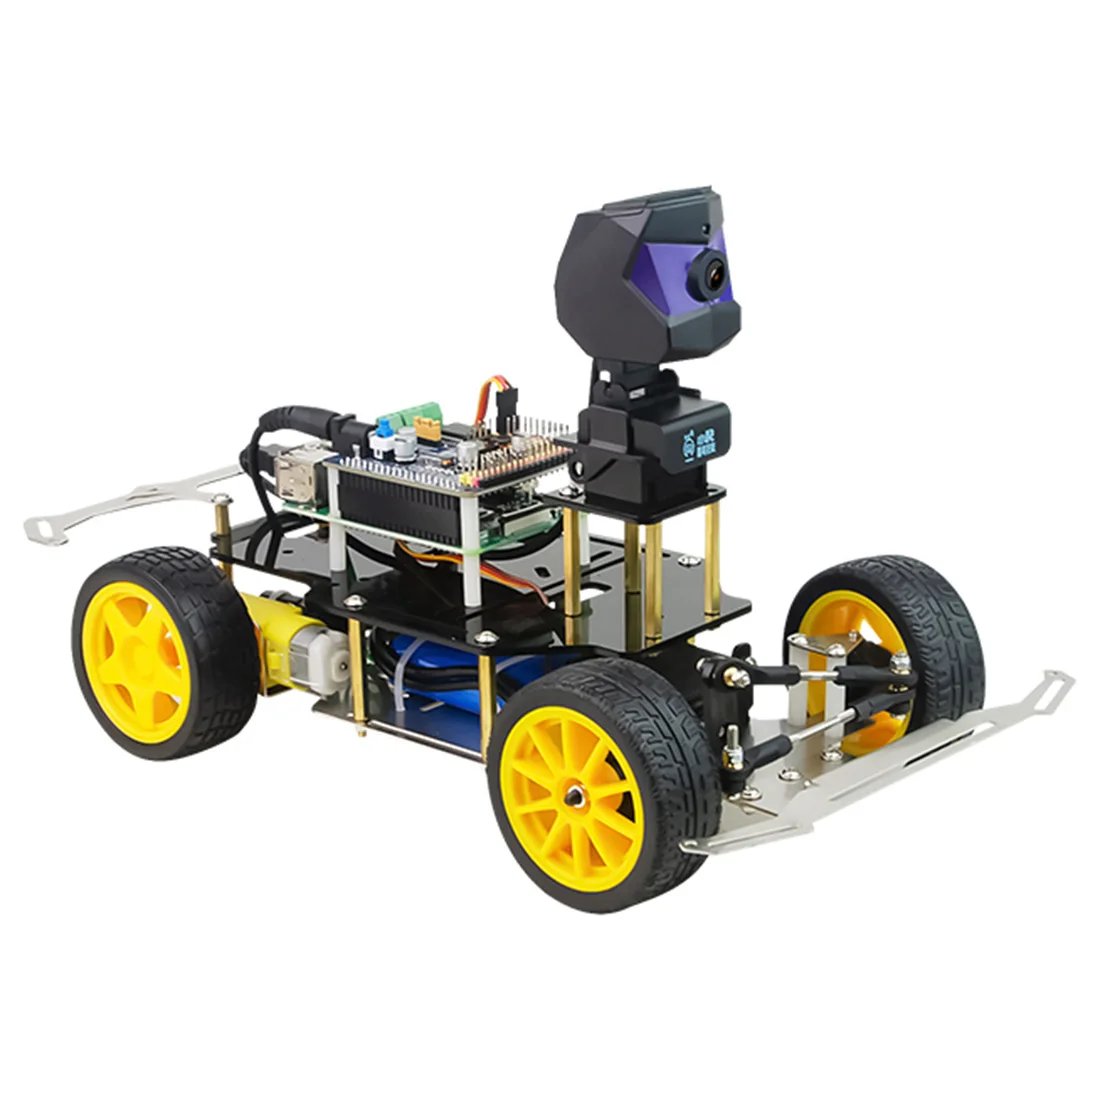  NFSTRIKE Donkey Car Smart AI Line Follower Robot Opensource DIY Self Driving Platform For Raspberry - 33050428178